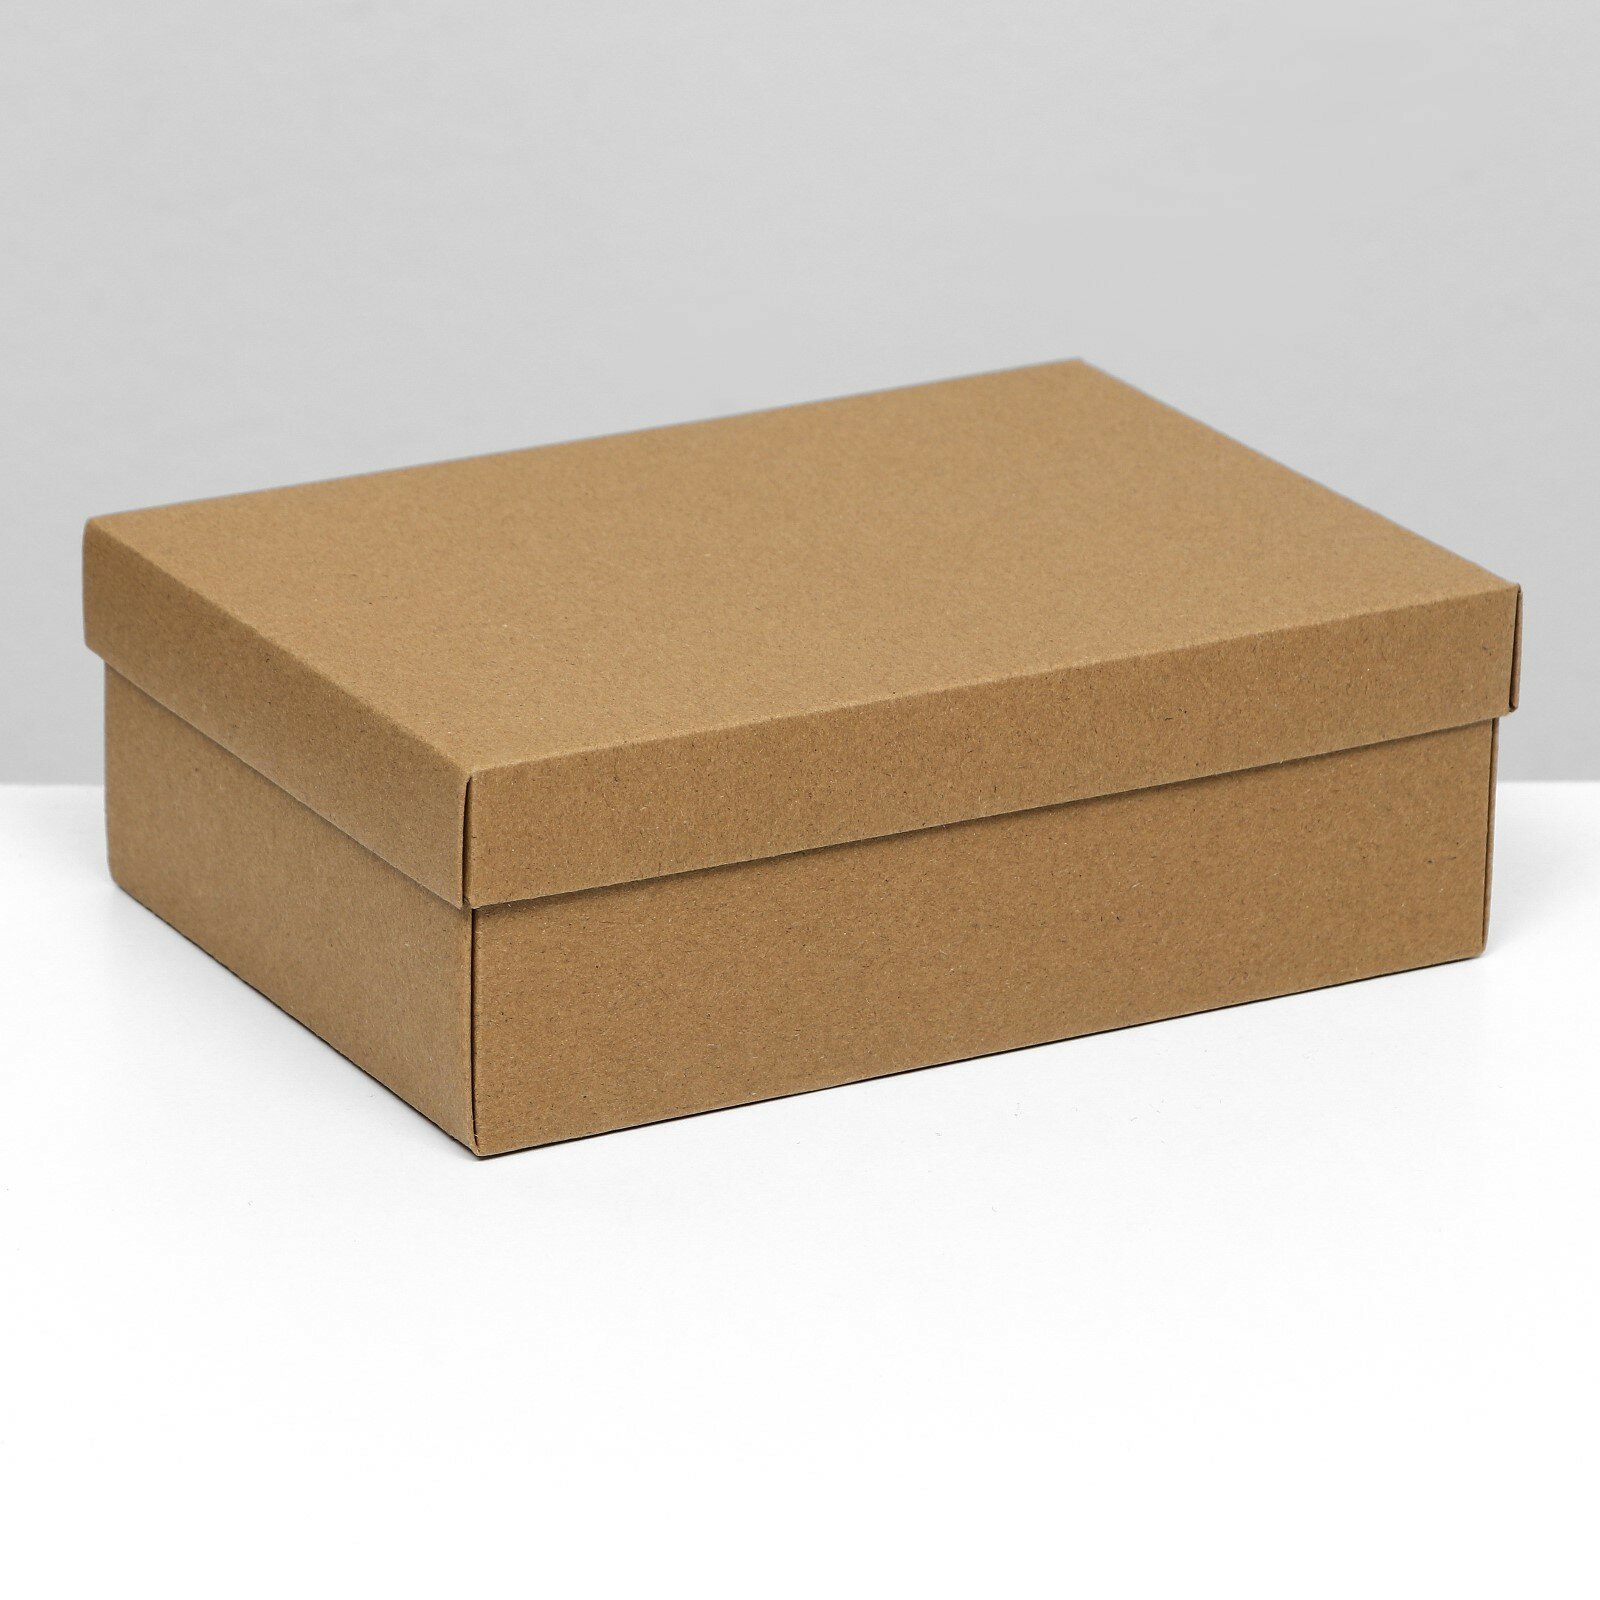 Коробка складная, крафт, 21 х 15 х 7 см (5шт.)